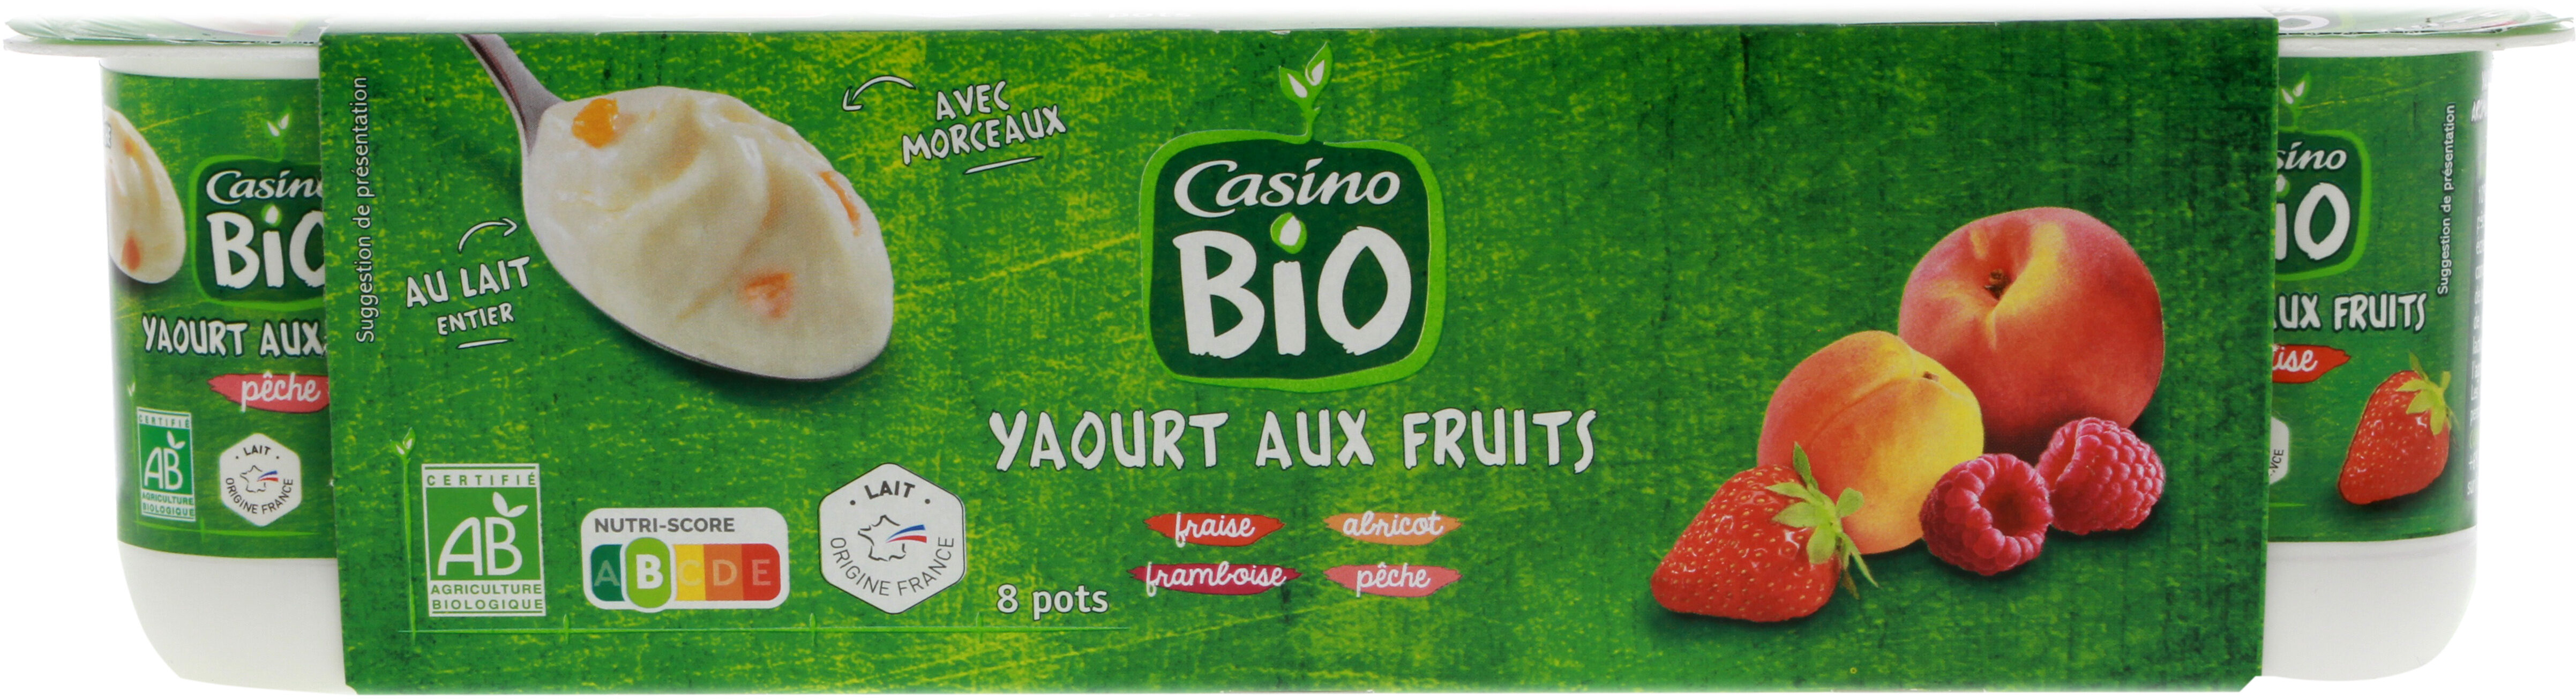 Yaourt aux fruits Abricot, Fraise, Framboise, Pêche BIO - Producto - fr